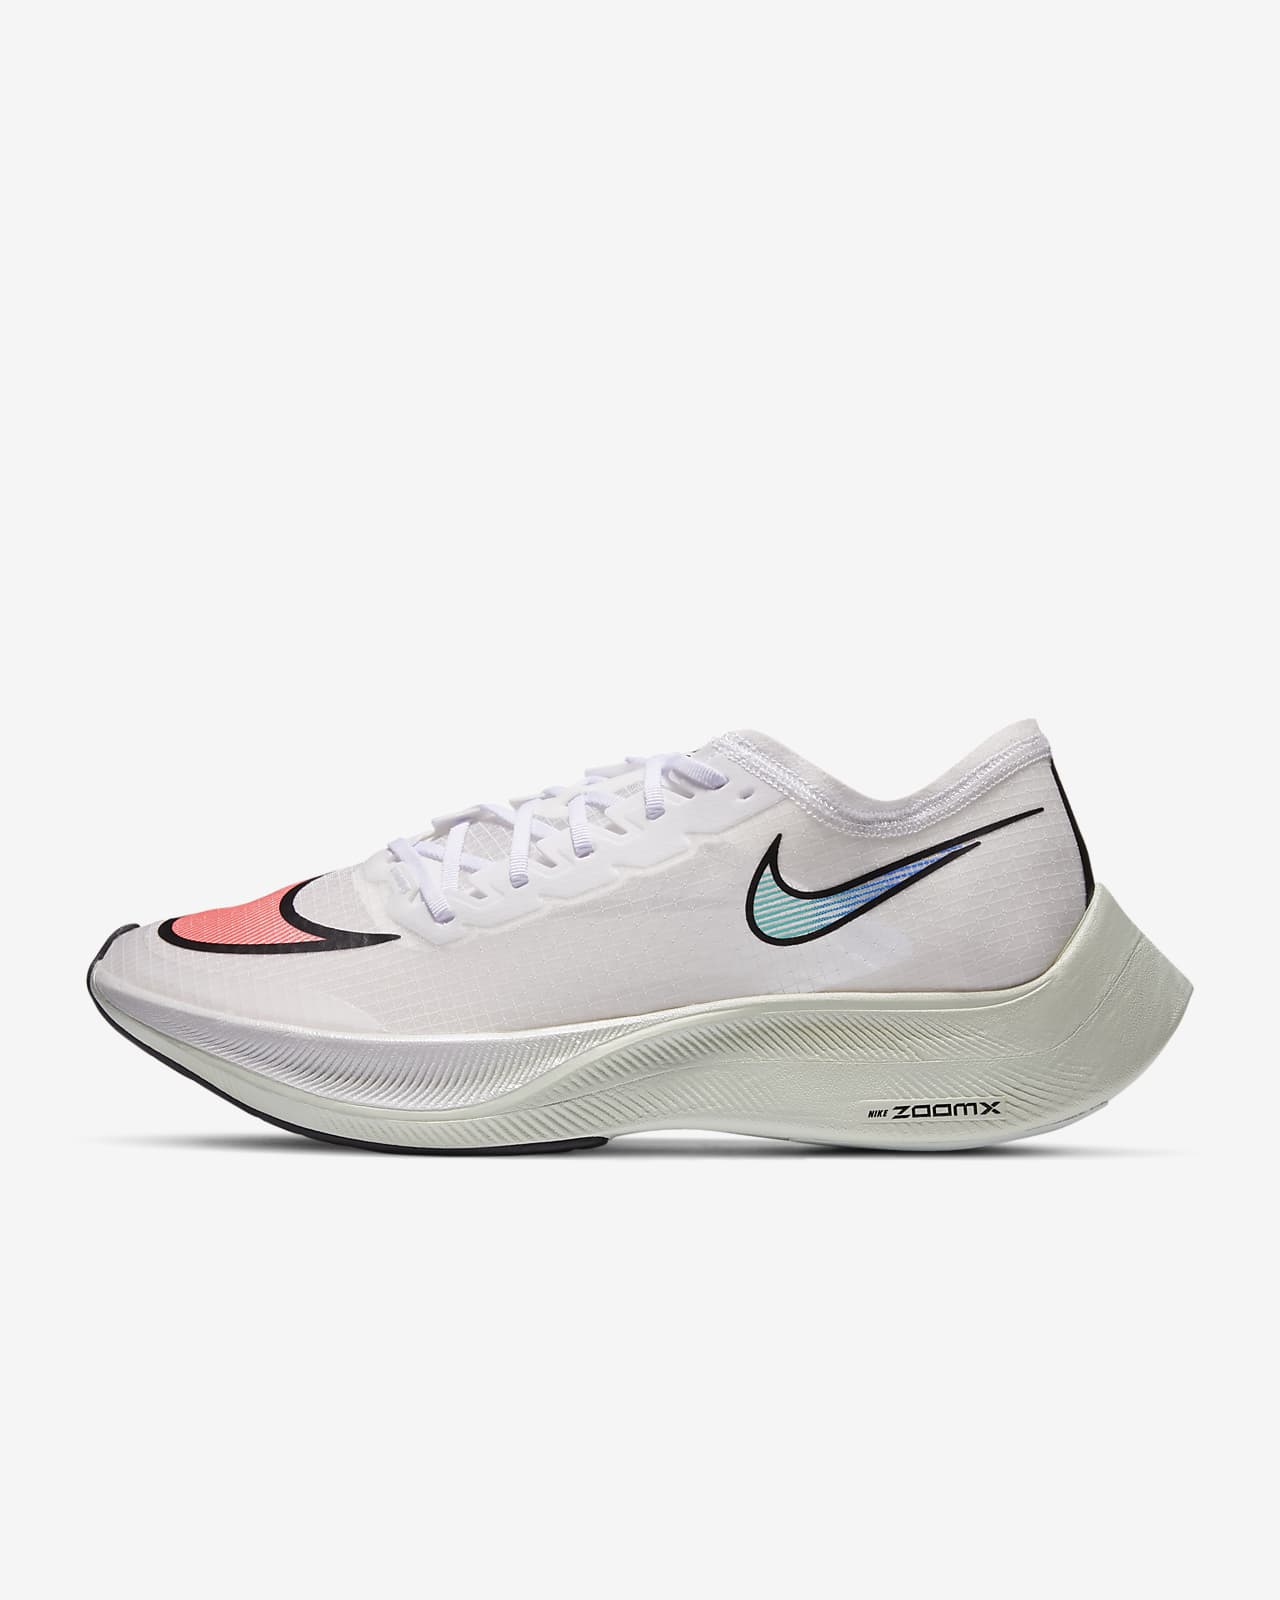 Nike ZoomX Vaporfly NEXT% Running Shoe 